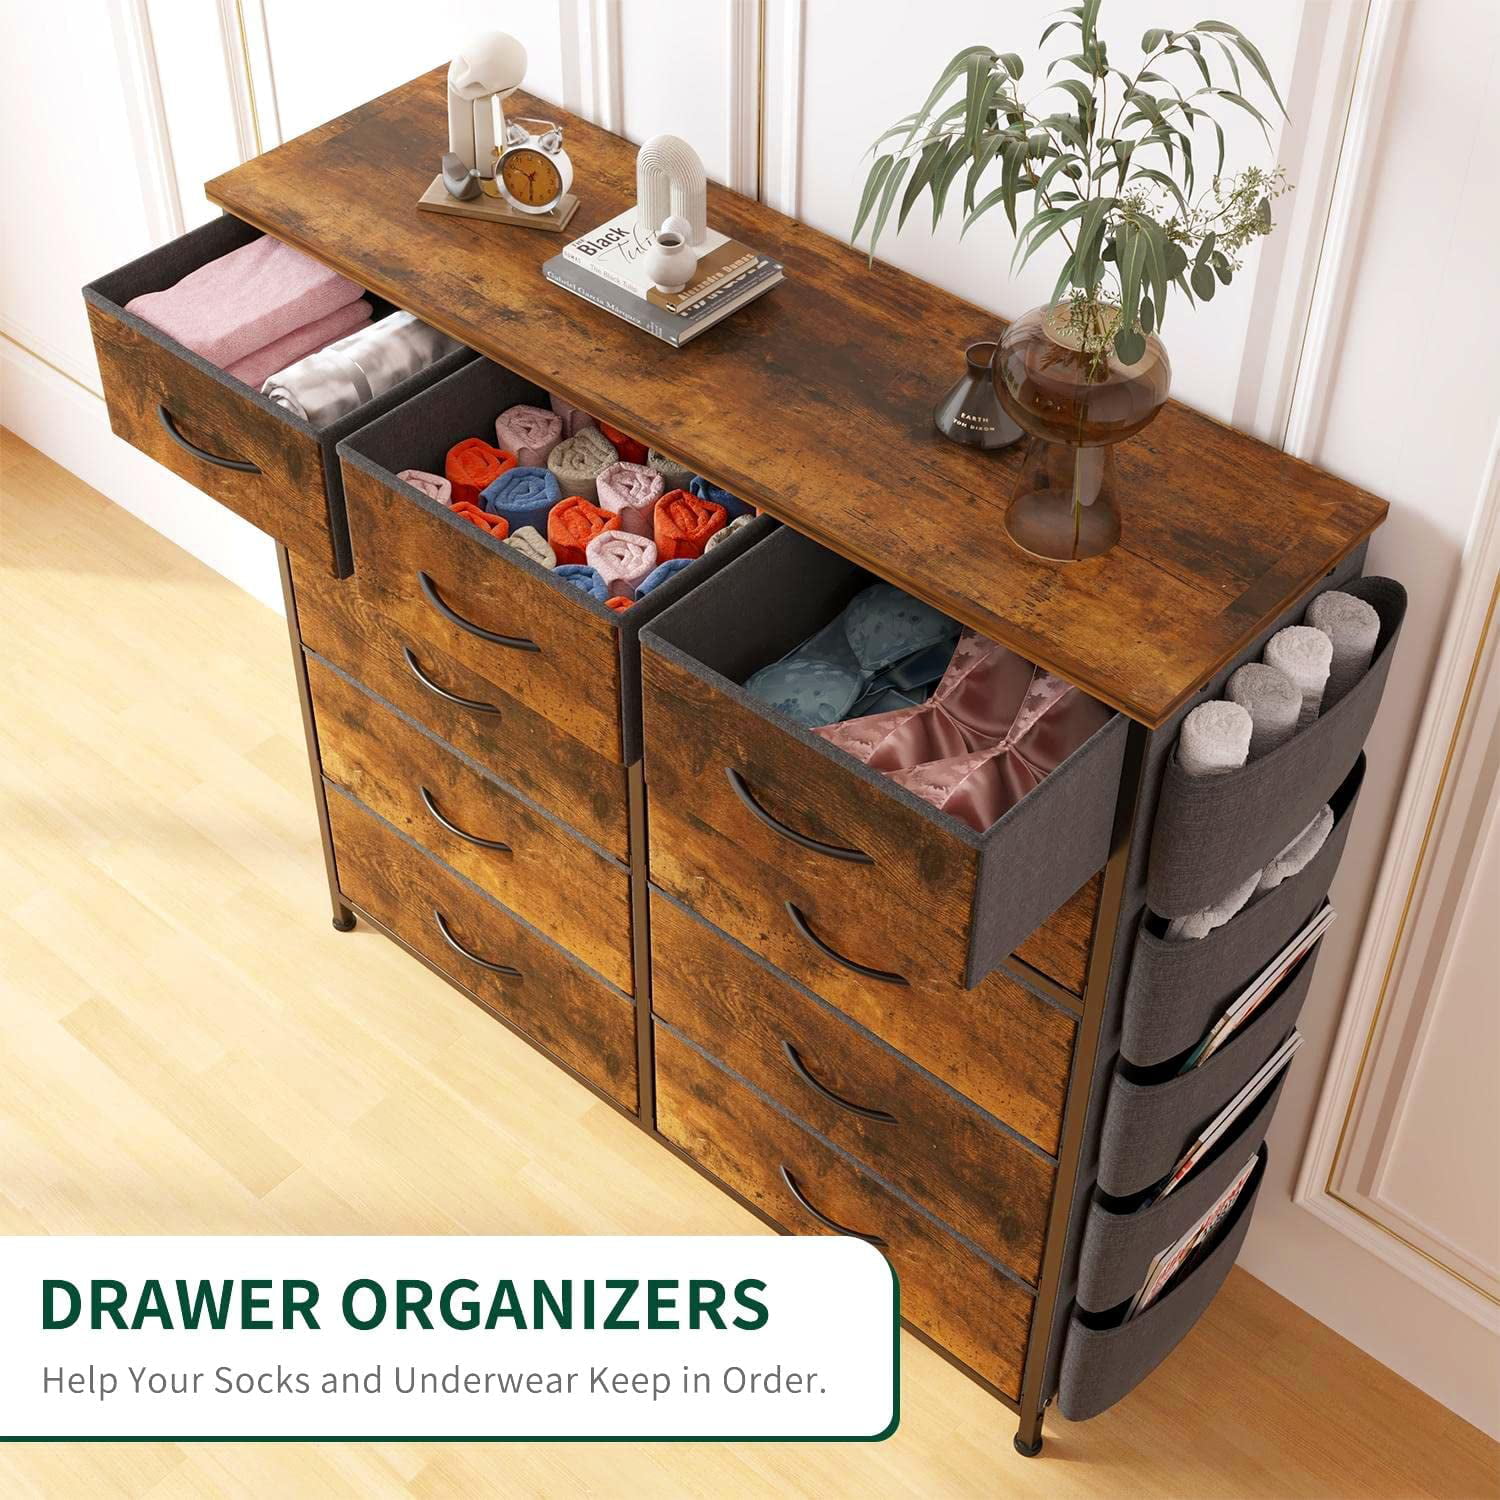 Pirecart 12-drawer Dresser, Fabric Storage Tower W/textured Print Fabric  Bins, Tall Chest Organizer Unit & Reviews